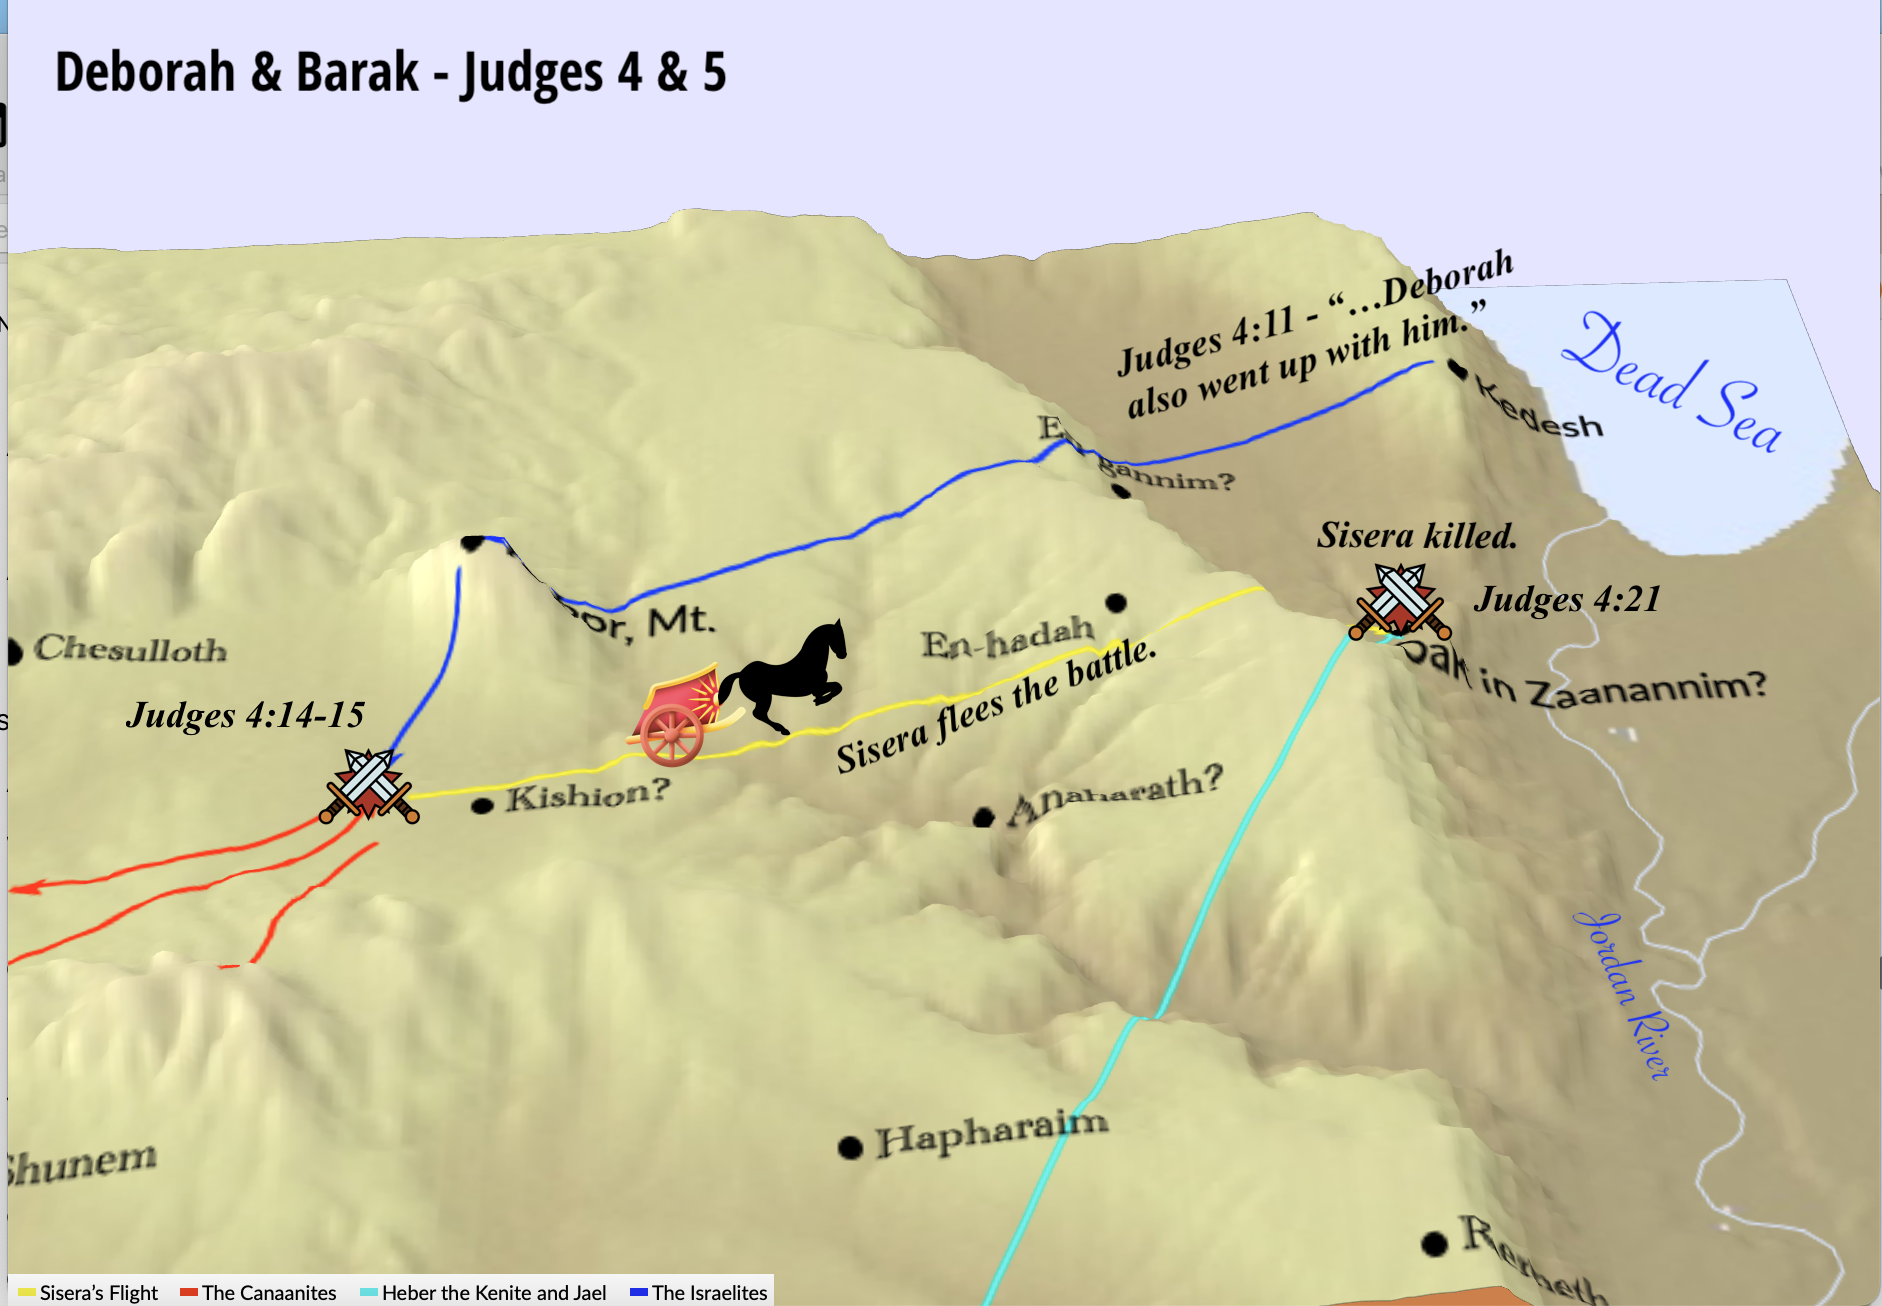 A map of the War of Deborah & Barak.